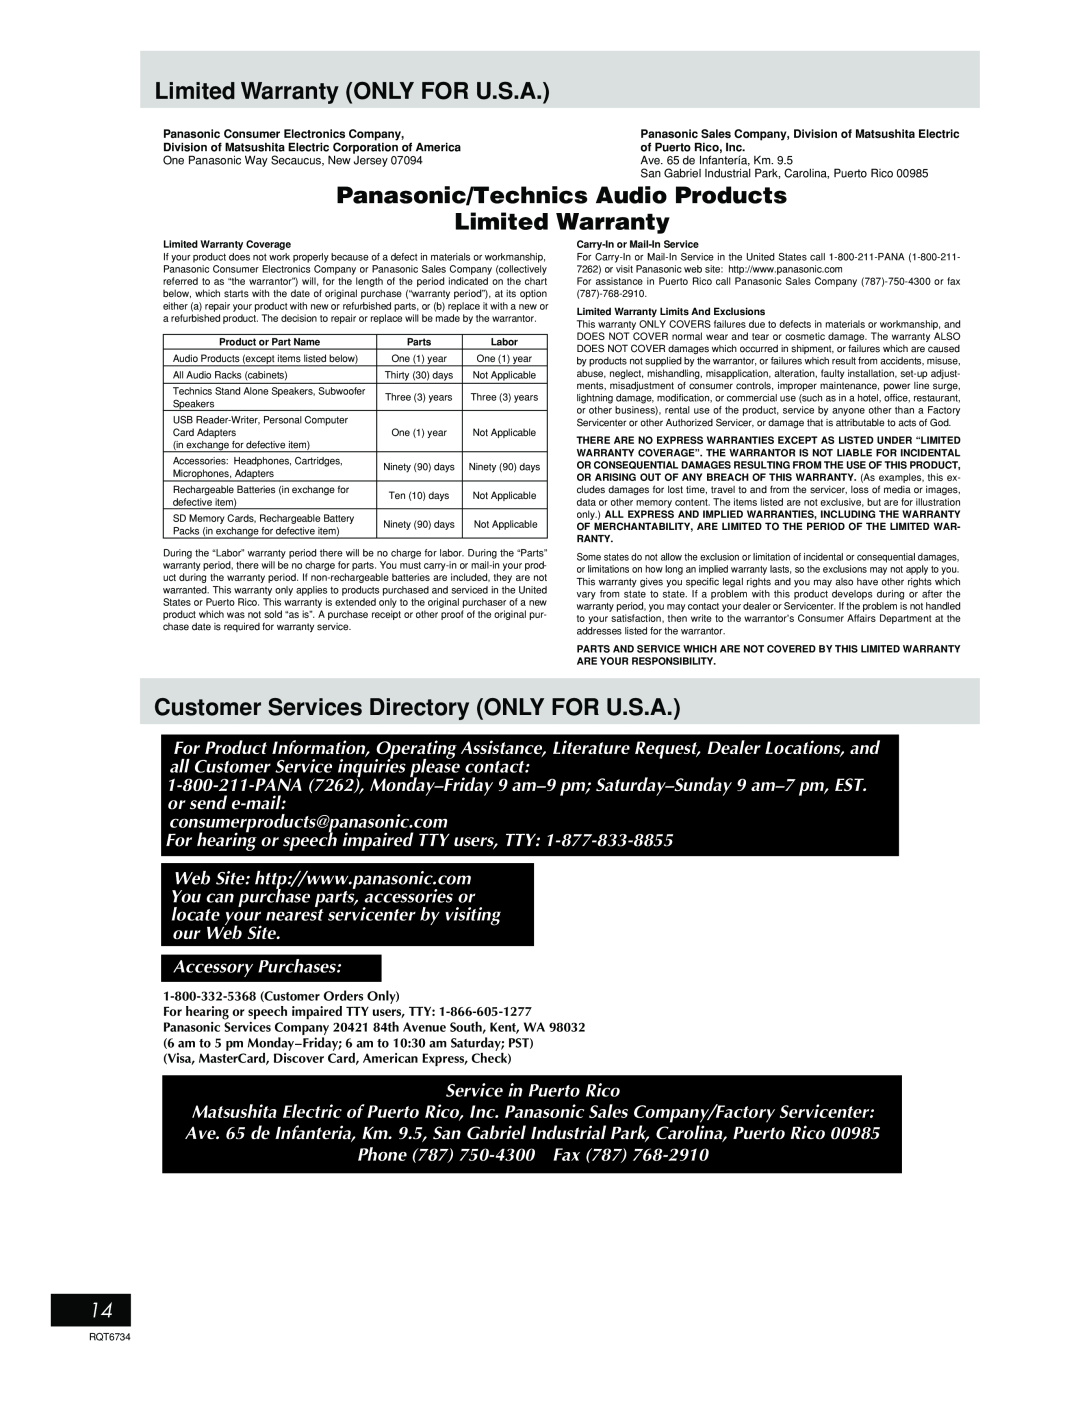 Panasonic SC-EN53 manual Limited Warranty ONLY FOR U.S.A, Panasonic/Technics Audio Products 